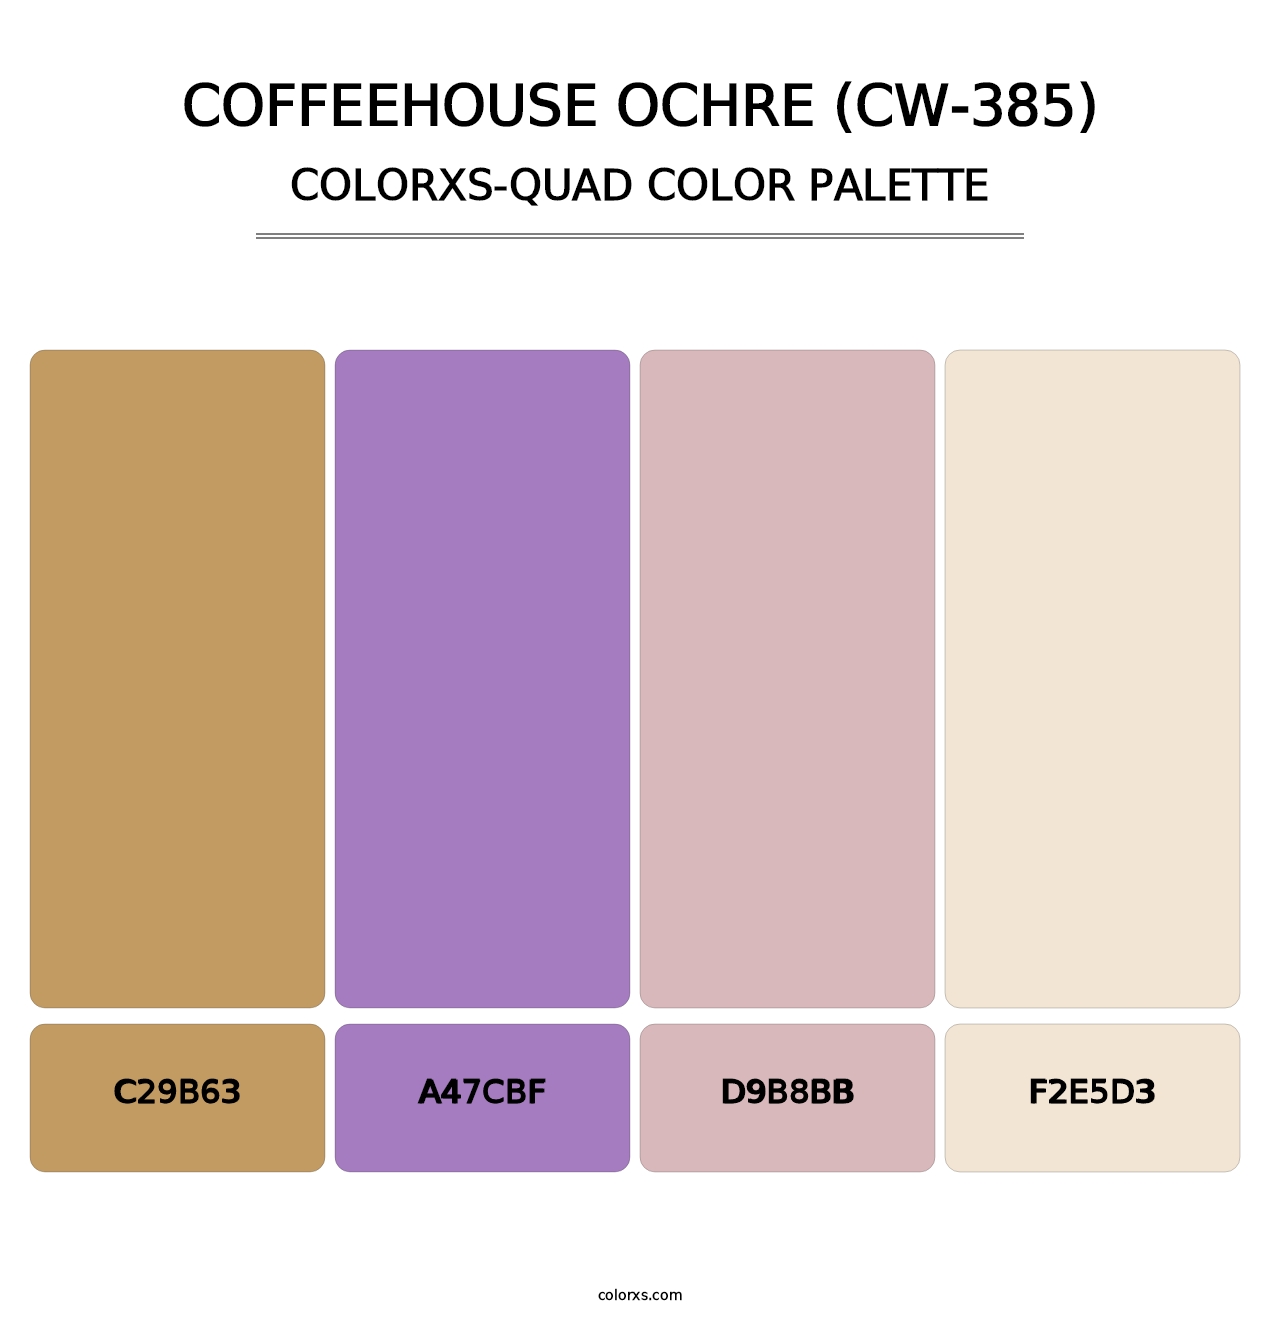 Coffeehouse Ochre (CW-385) - Colorxs Quad Palette